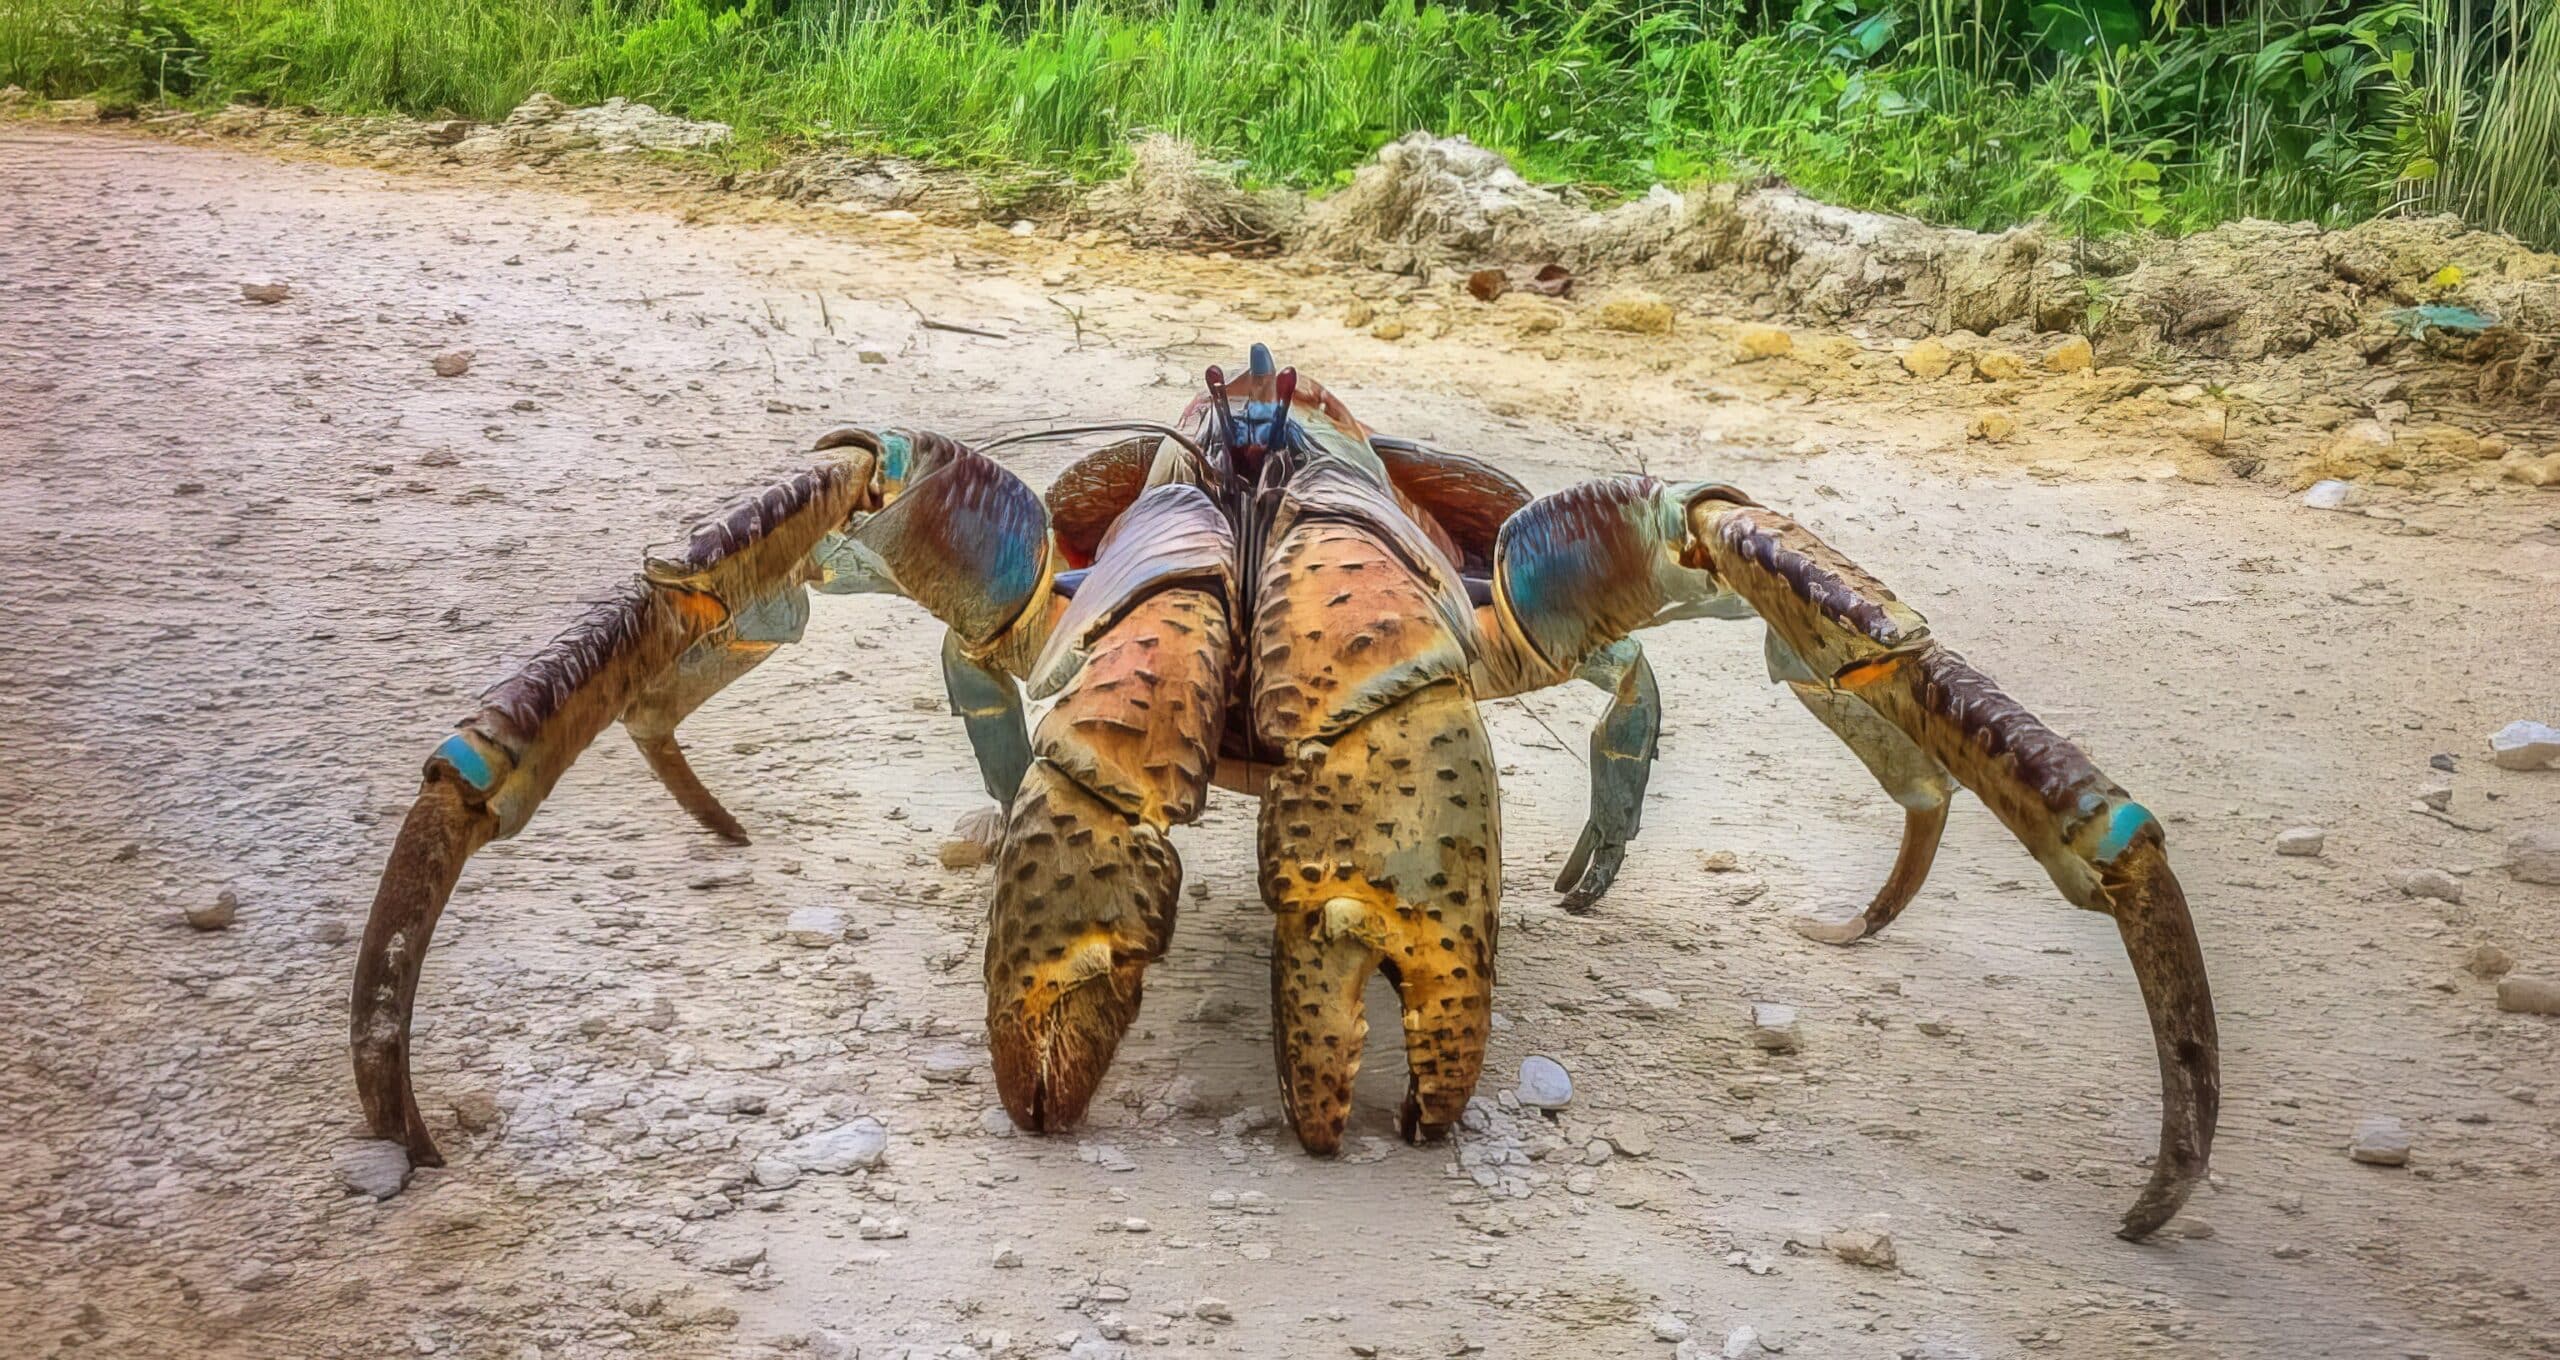 Giant coconut crabs